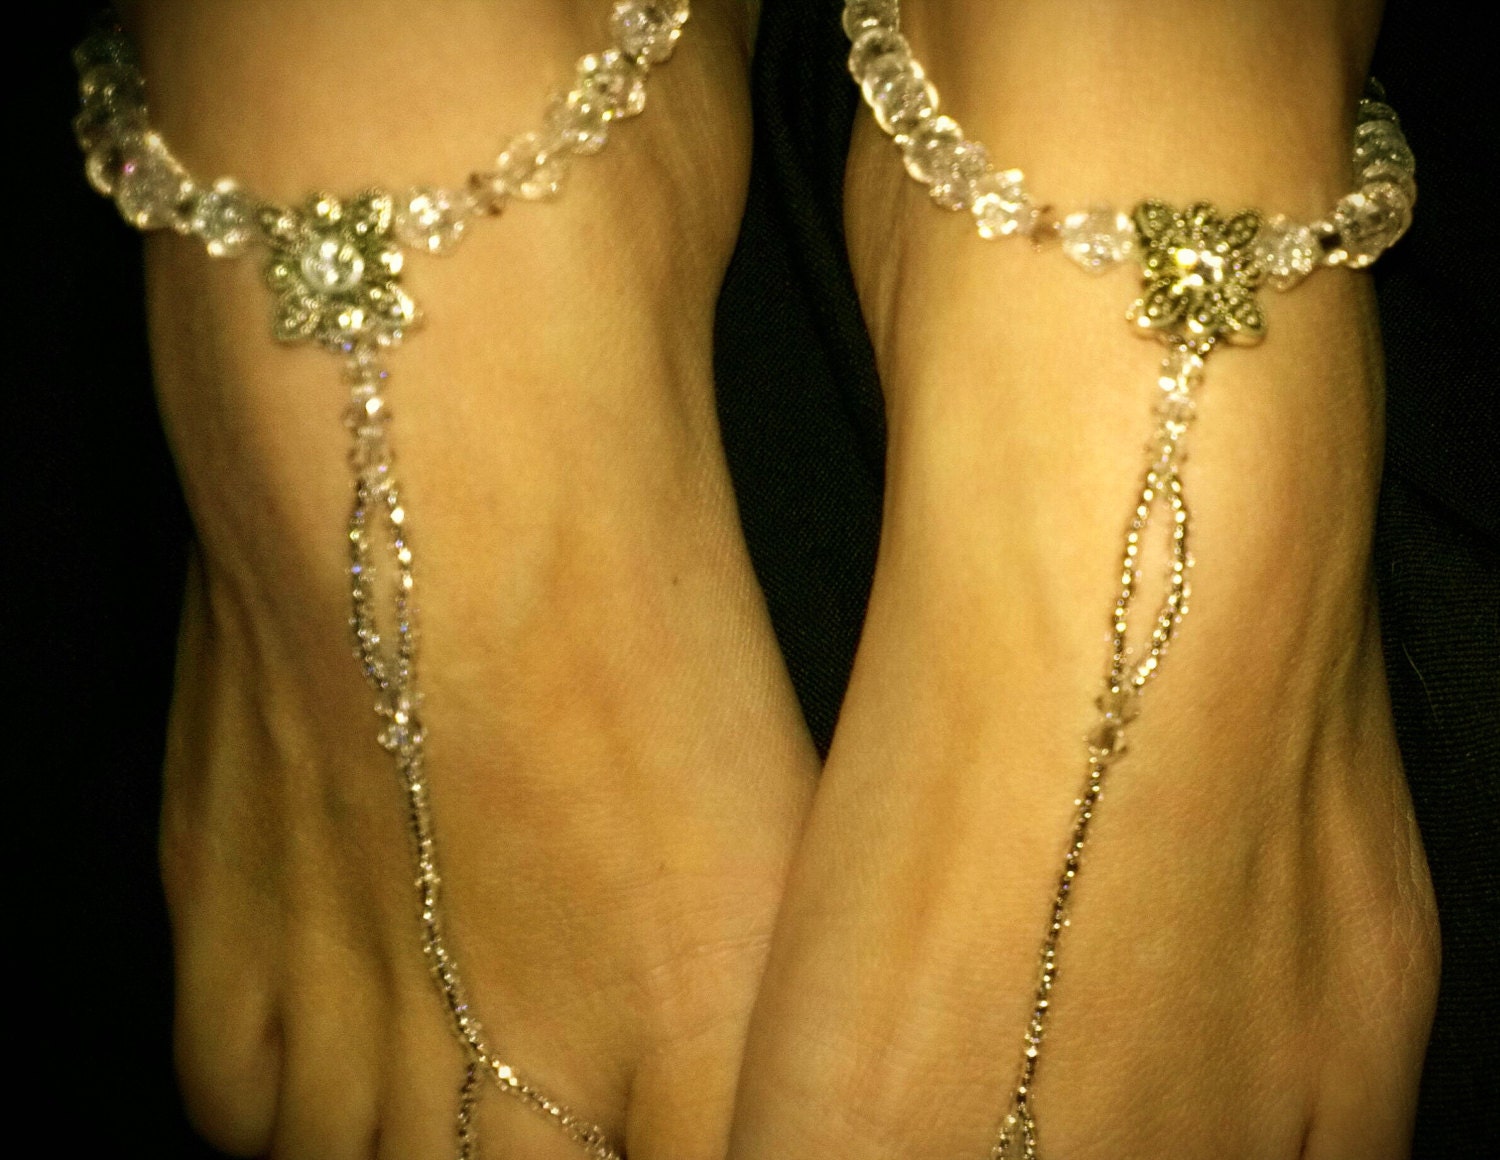 Bridal Swarovski Foot Jewelry by FootJewelrybyDanya on Etsy